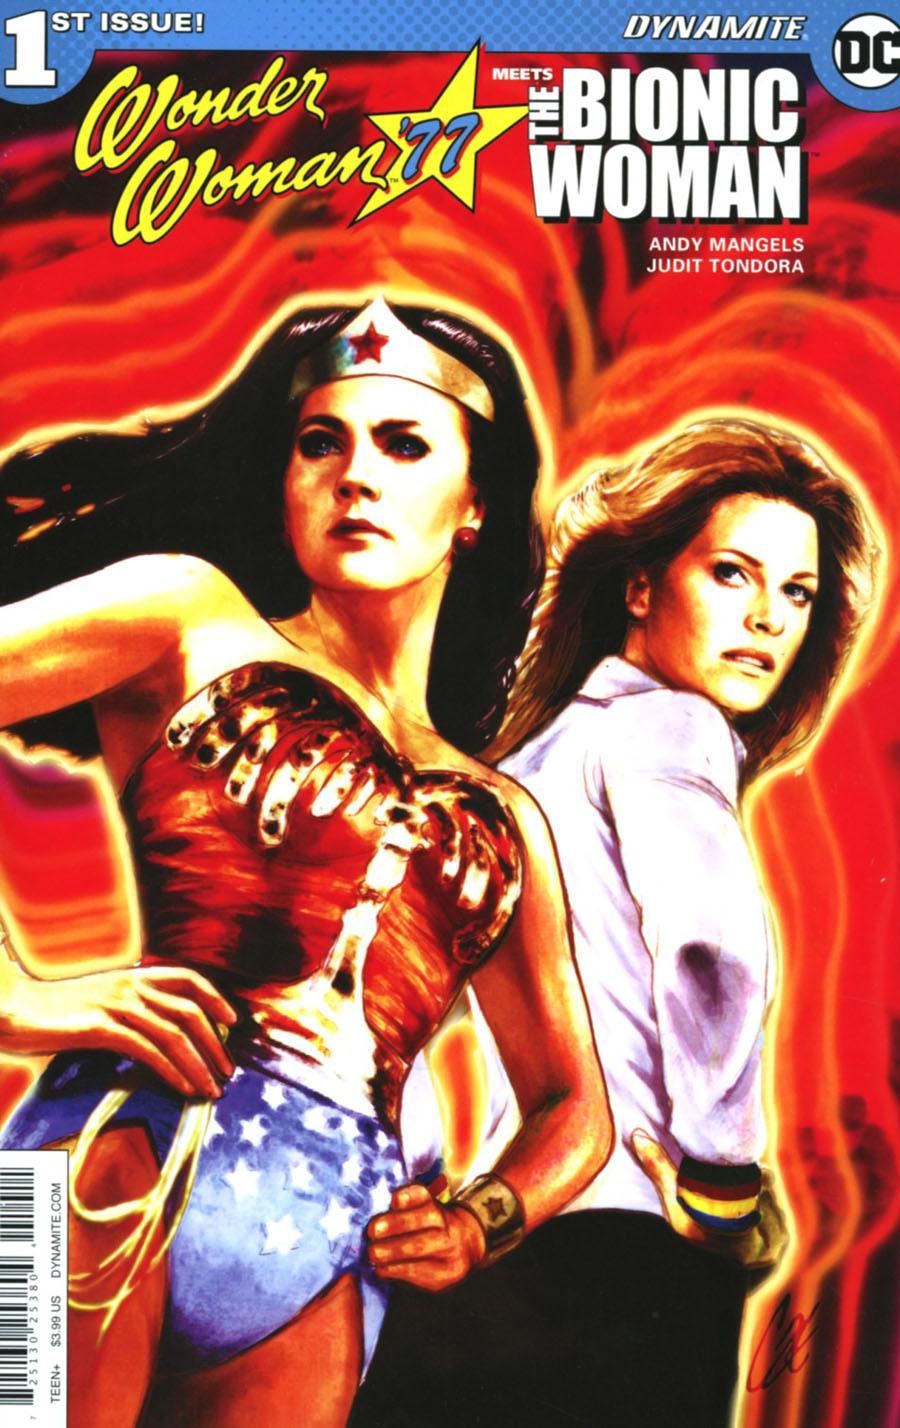 Wonder Woman 77 Meets The Bionic Woman Vol. 1 #1